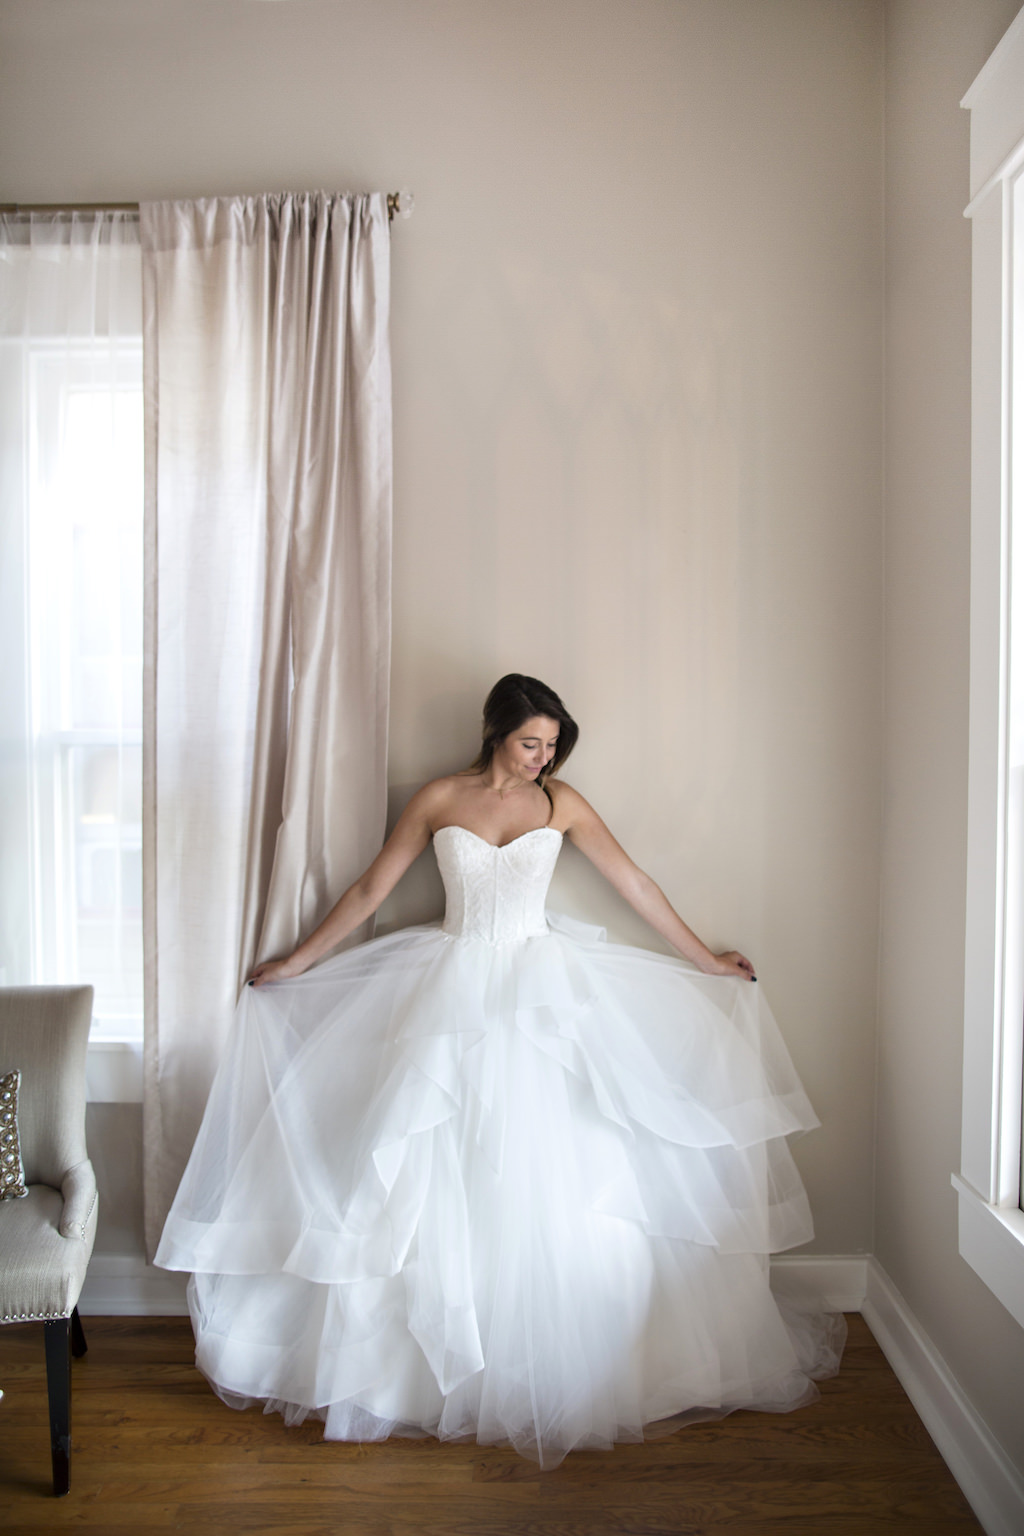 Lis Simon | The Bride Tampa Bridal Shop | Couture Wedding Dress Salon in Ybor City | Wedding & Fashion Photographer Djmael Photography